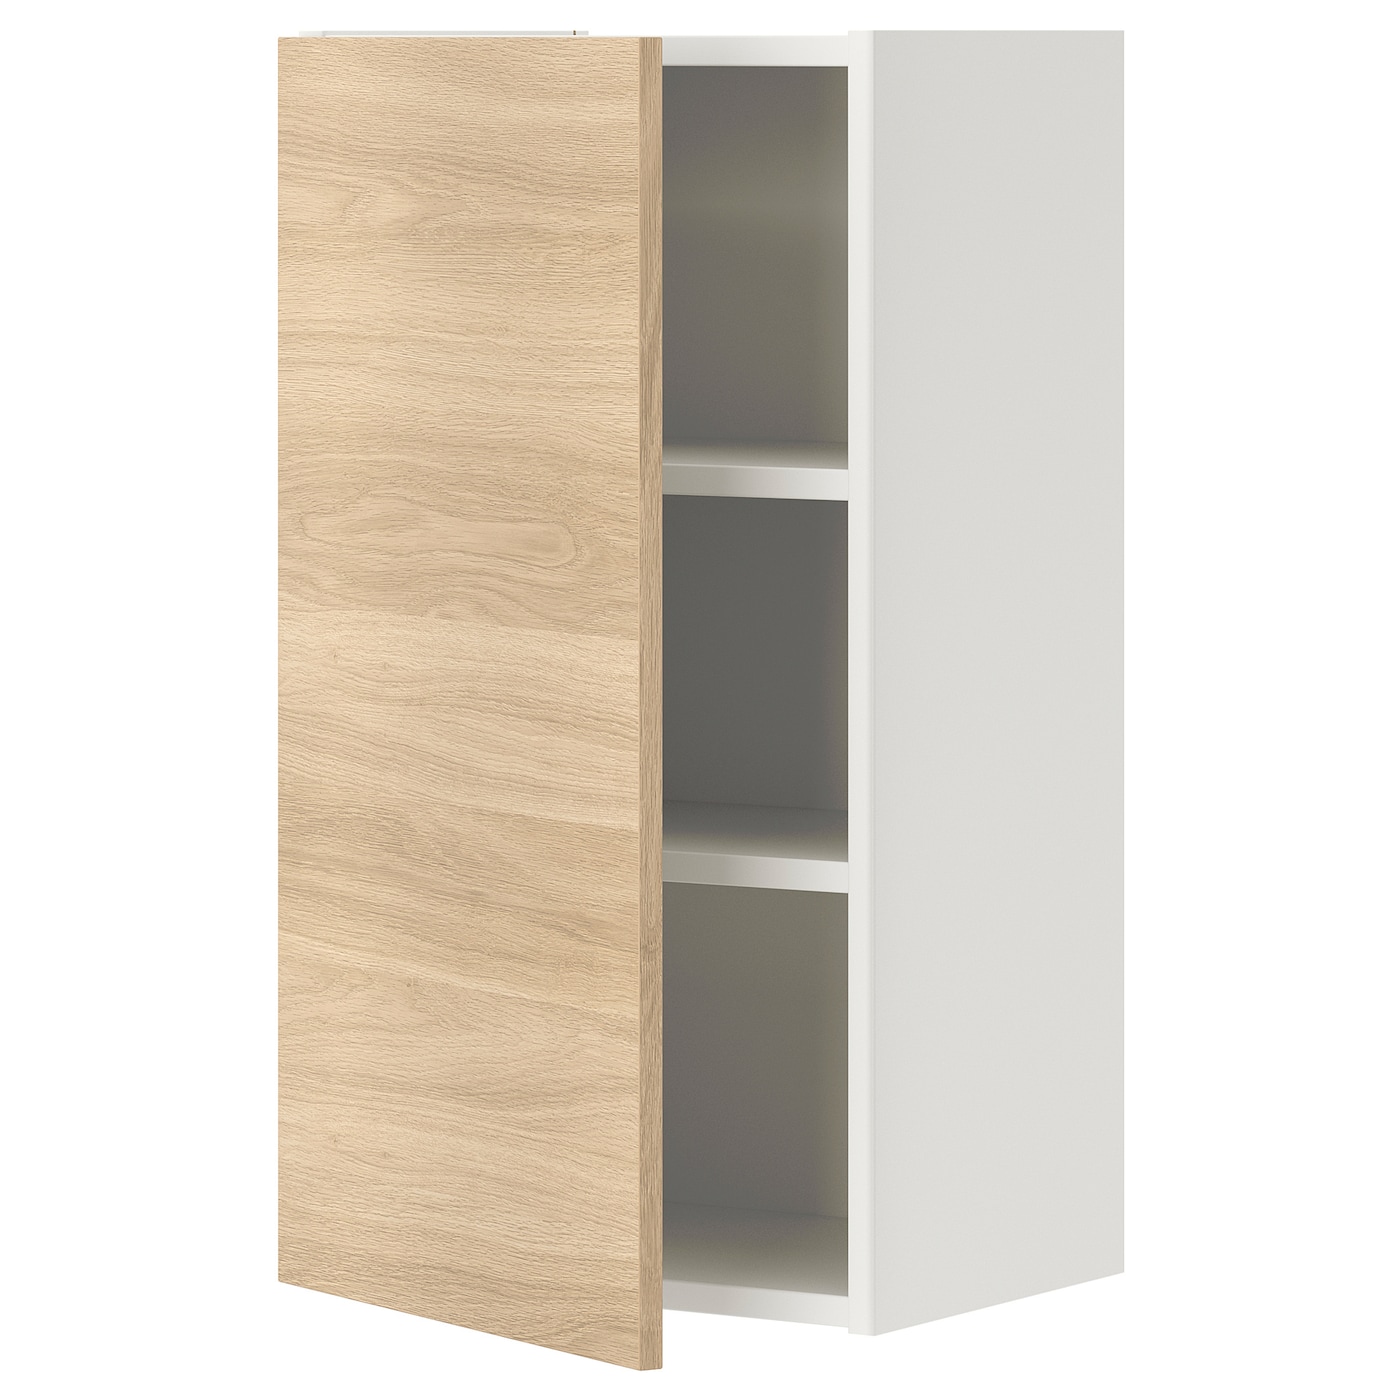 Кухонный навесной шкаф - ENHET IKEA/ ЭНХЕТ ИКЕА, 40х30х75 см, белый/бежевый